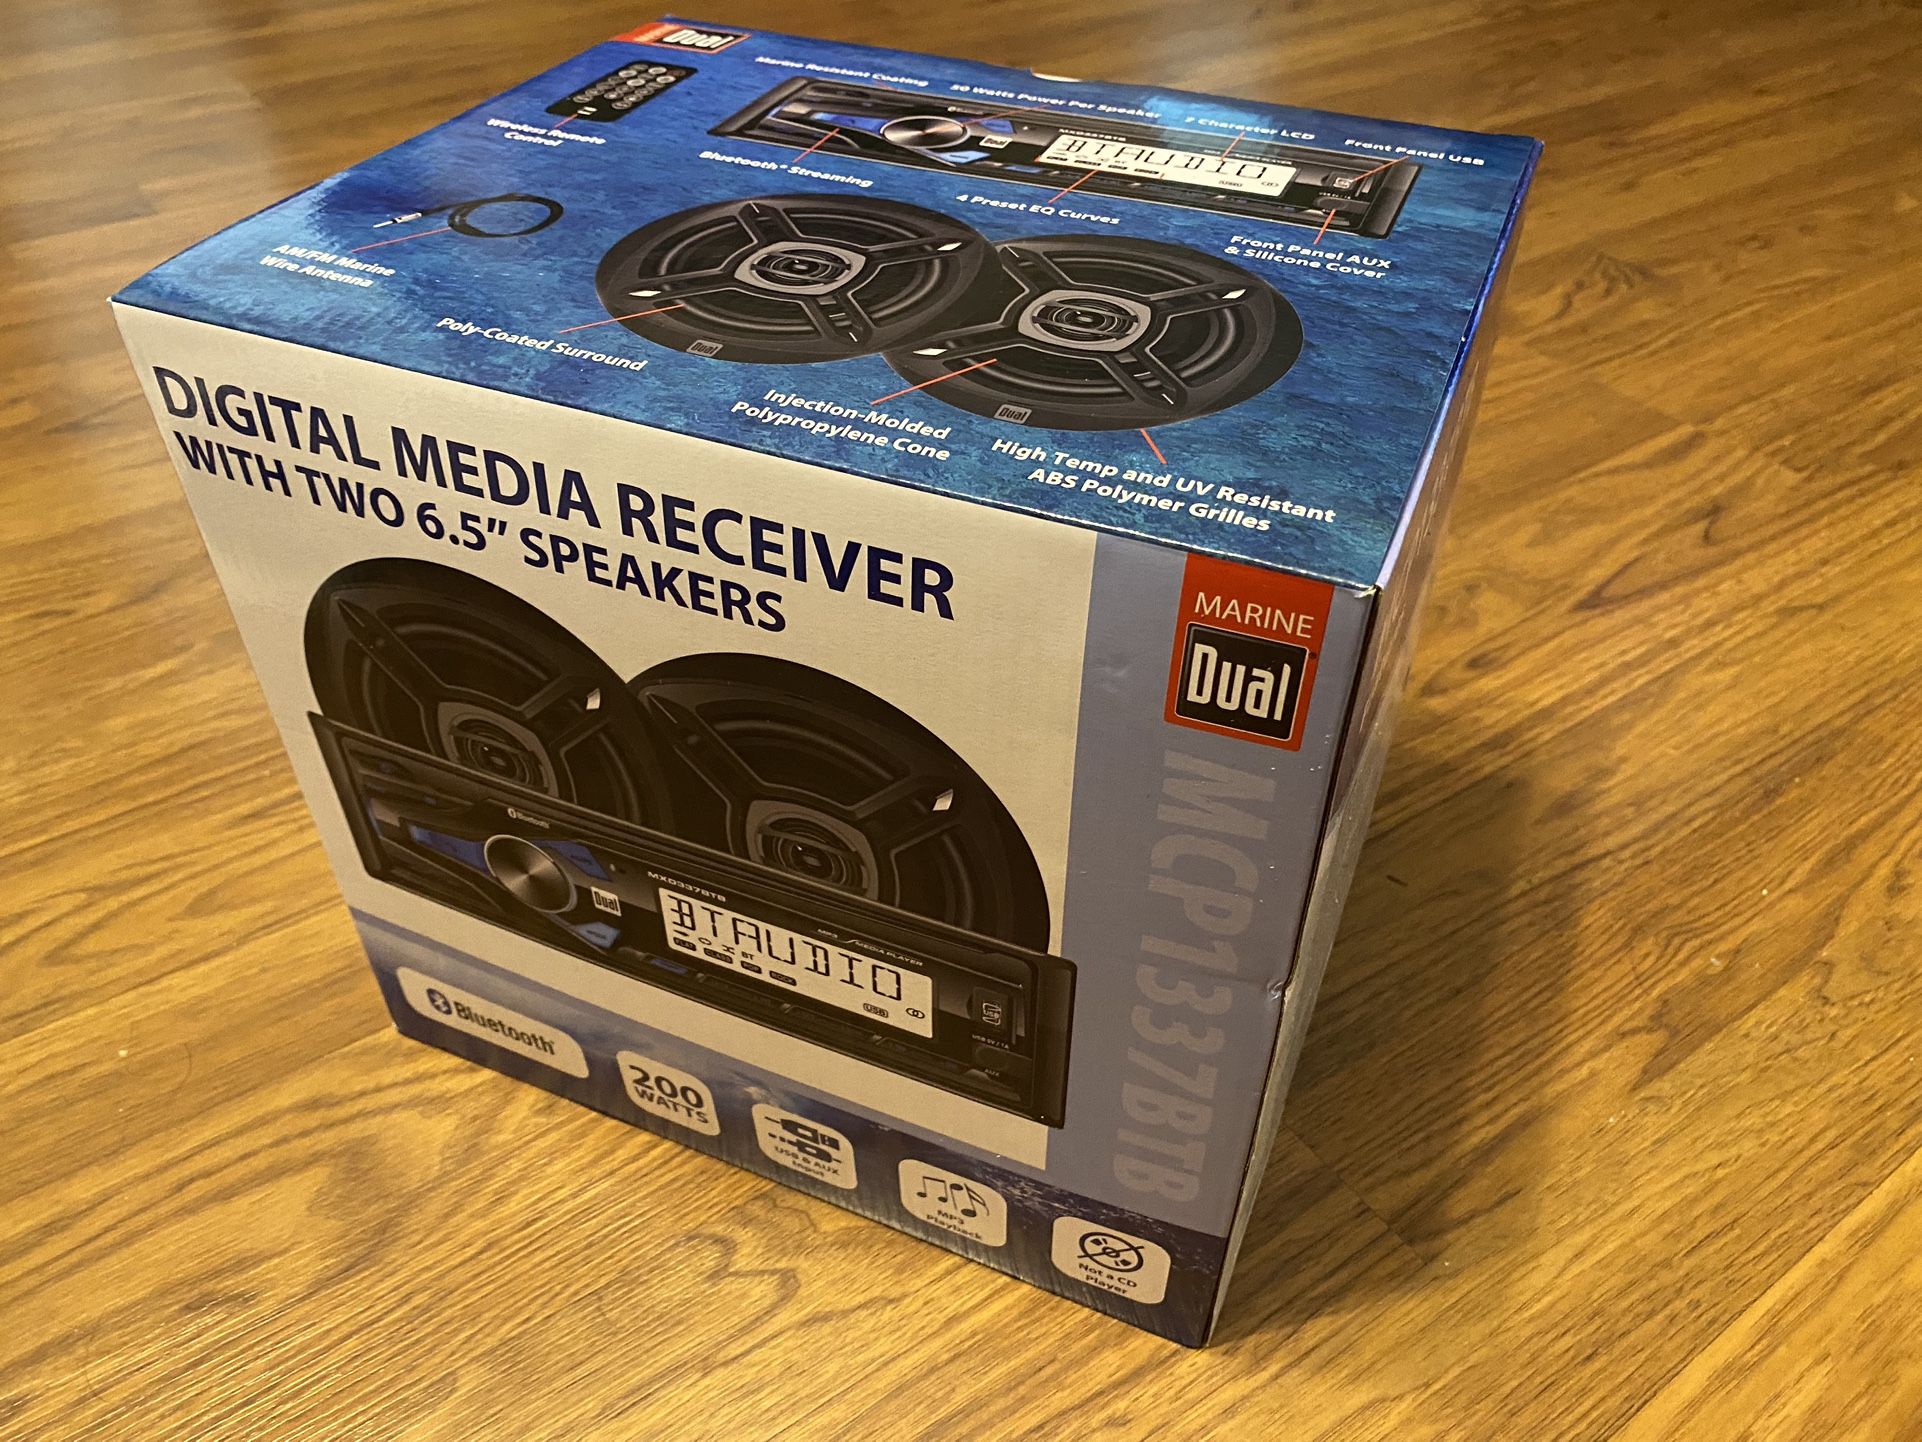 NIB Dual Marine Digital Media Receiver With Speakers